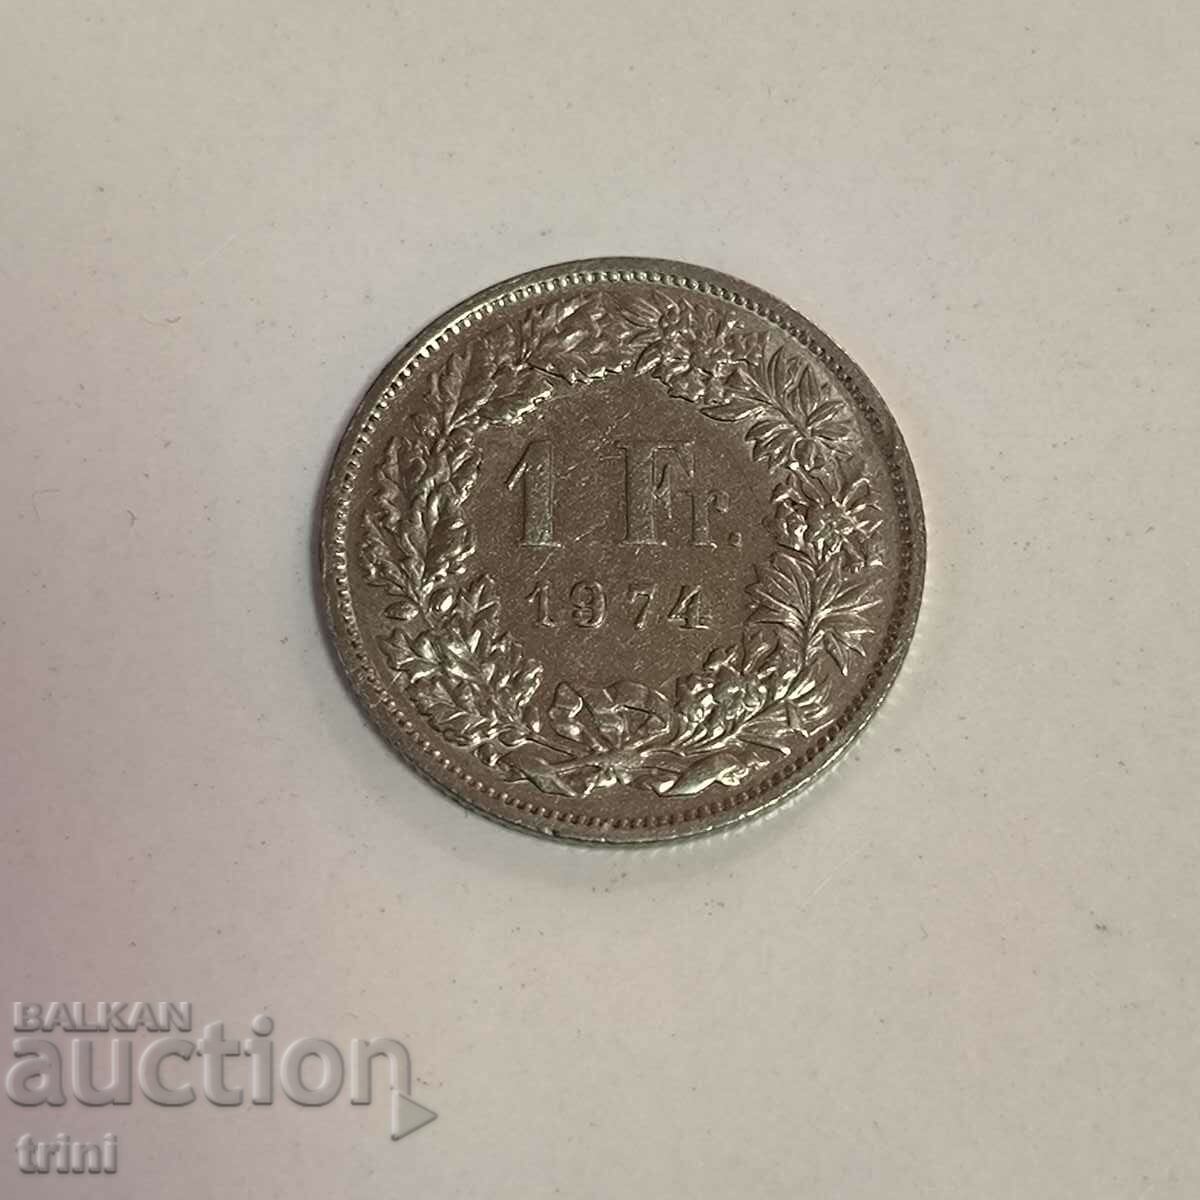 Elvetia 1 franc 1974 anul g39